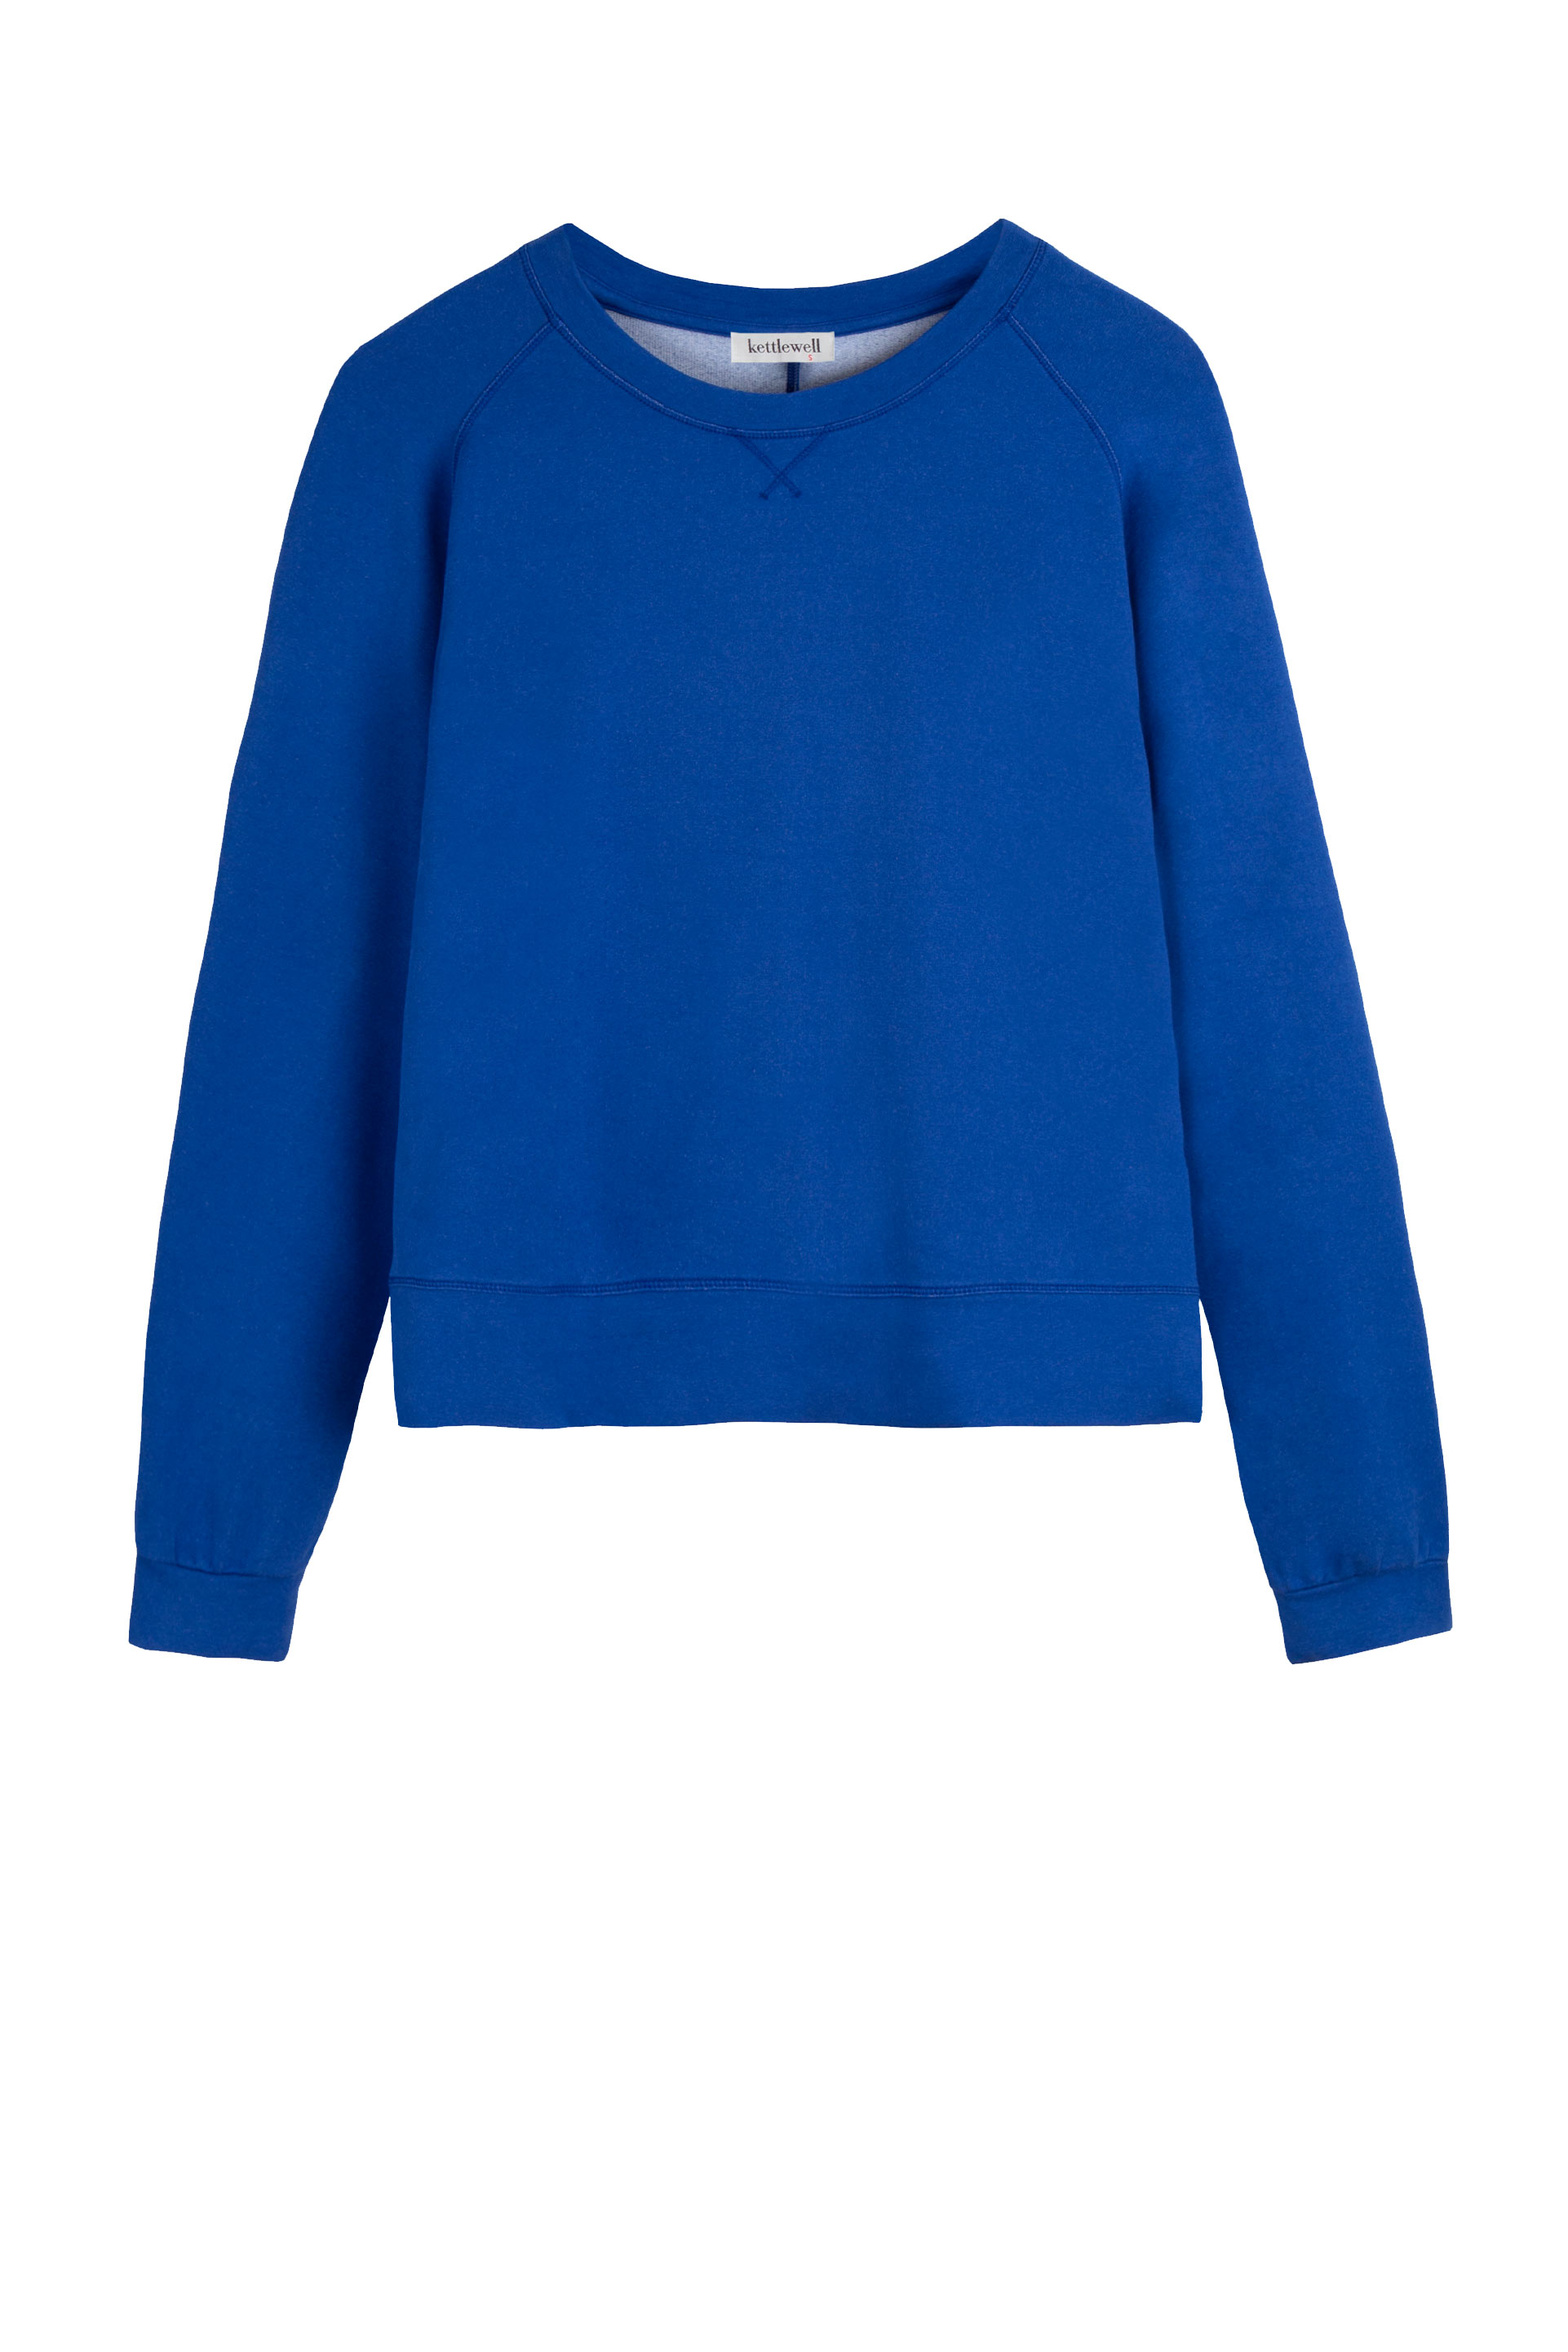 16003_supersoft_sweater_star_blue.jpg